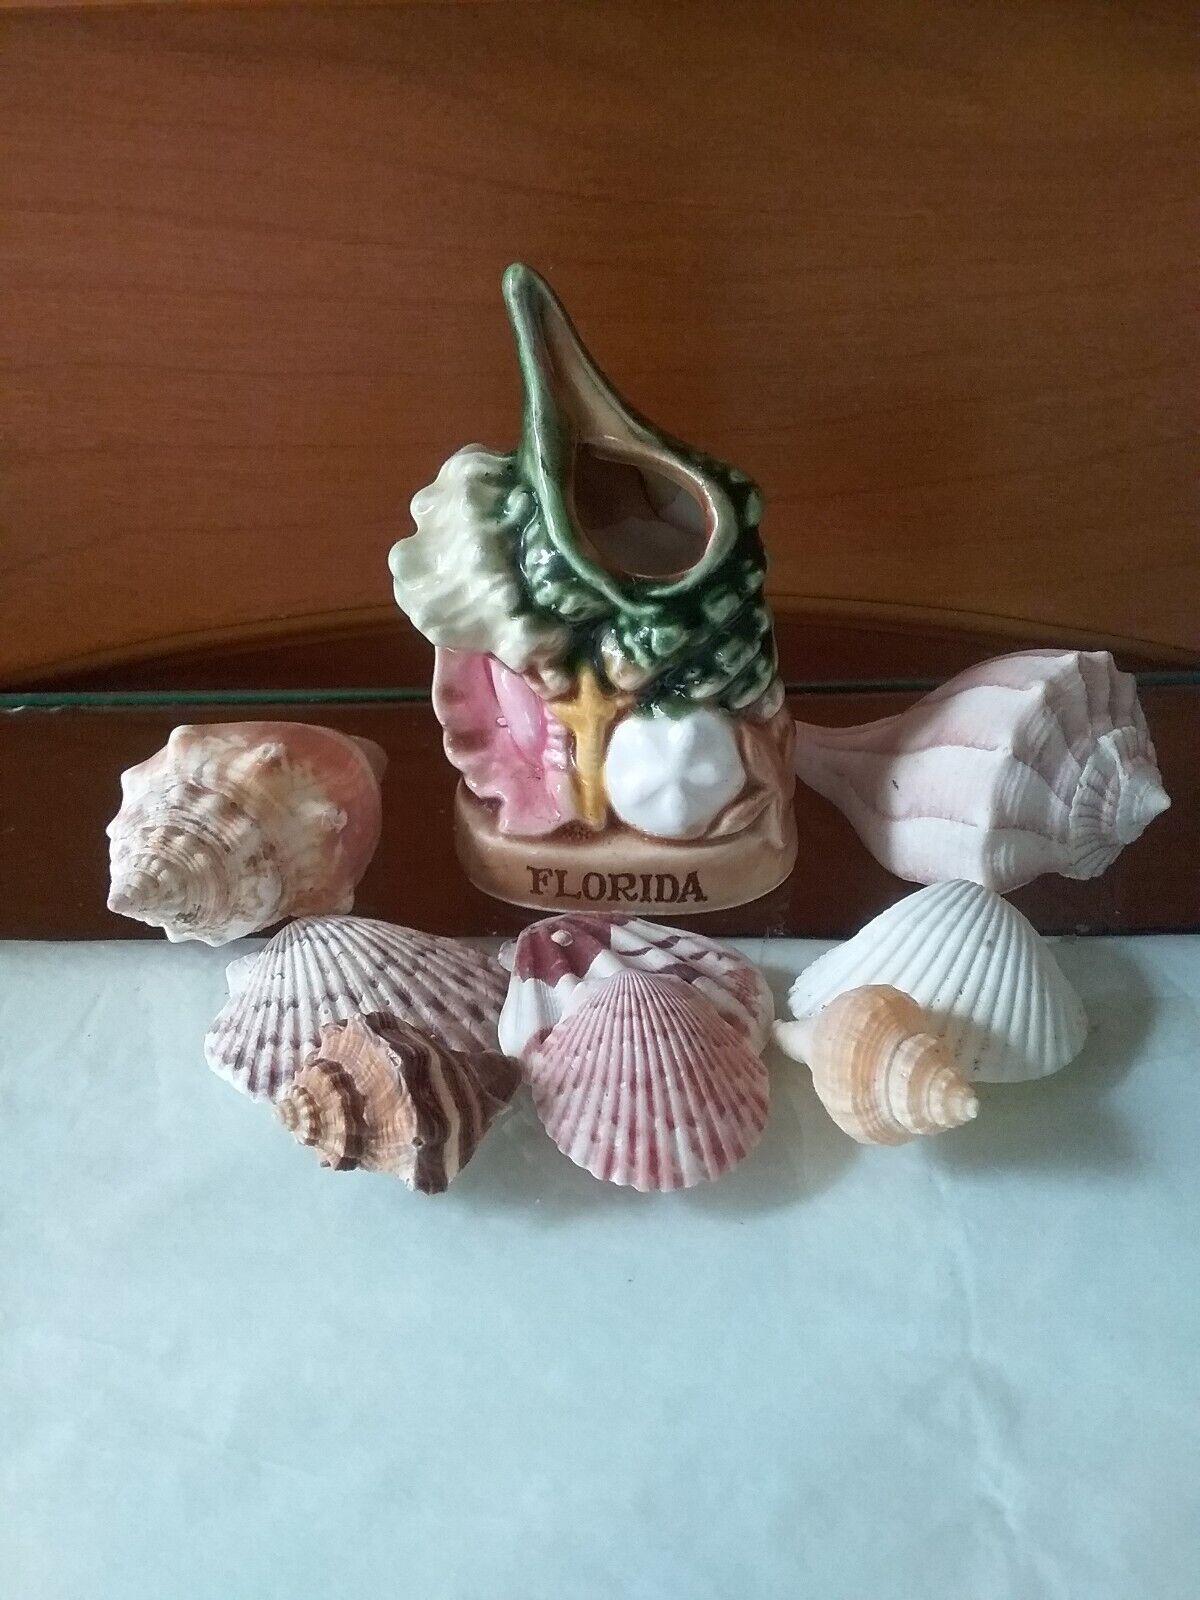 Vintage JAPAN Toothpick Holder Florida Travel Souvenir w/Handpicked Seashells